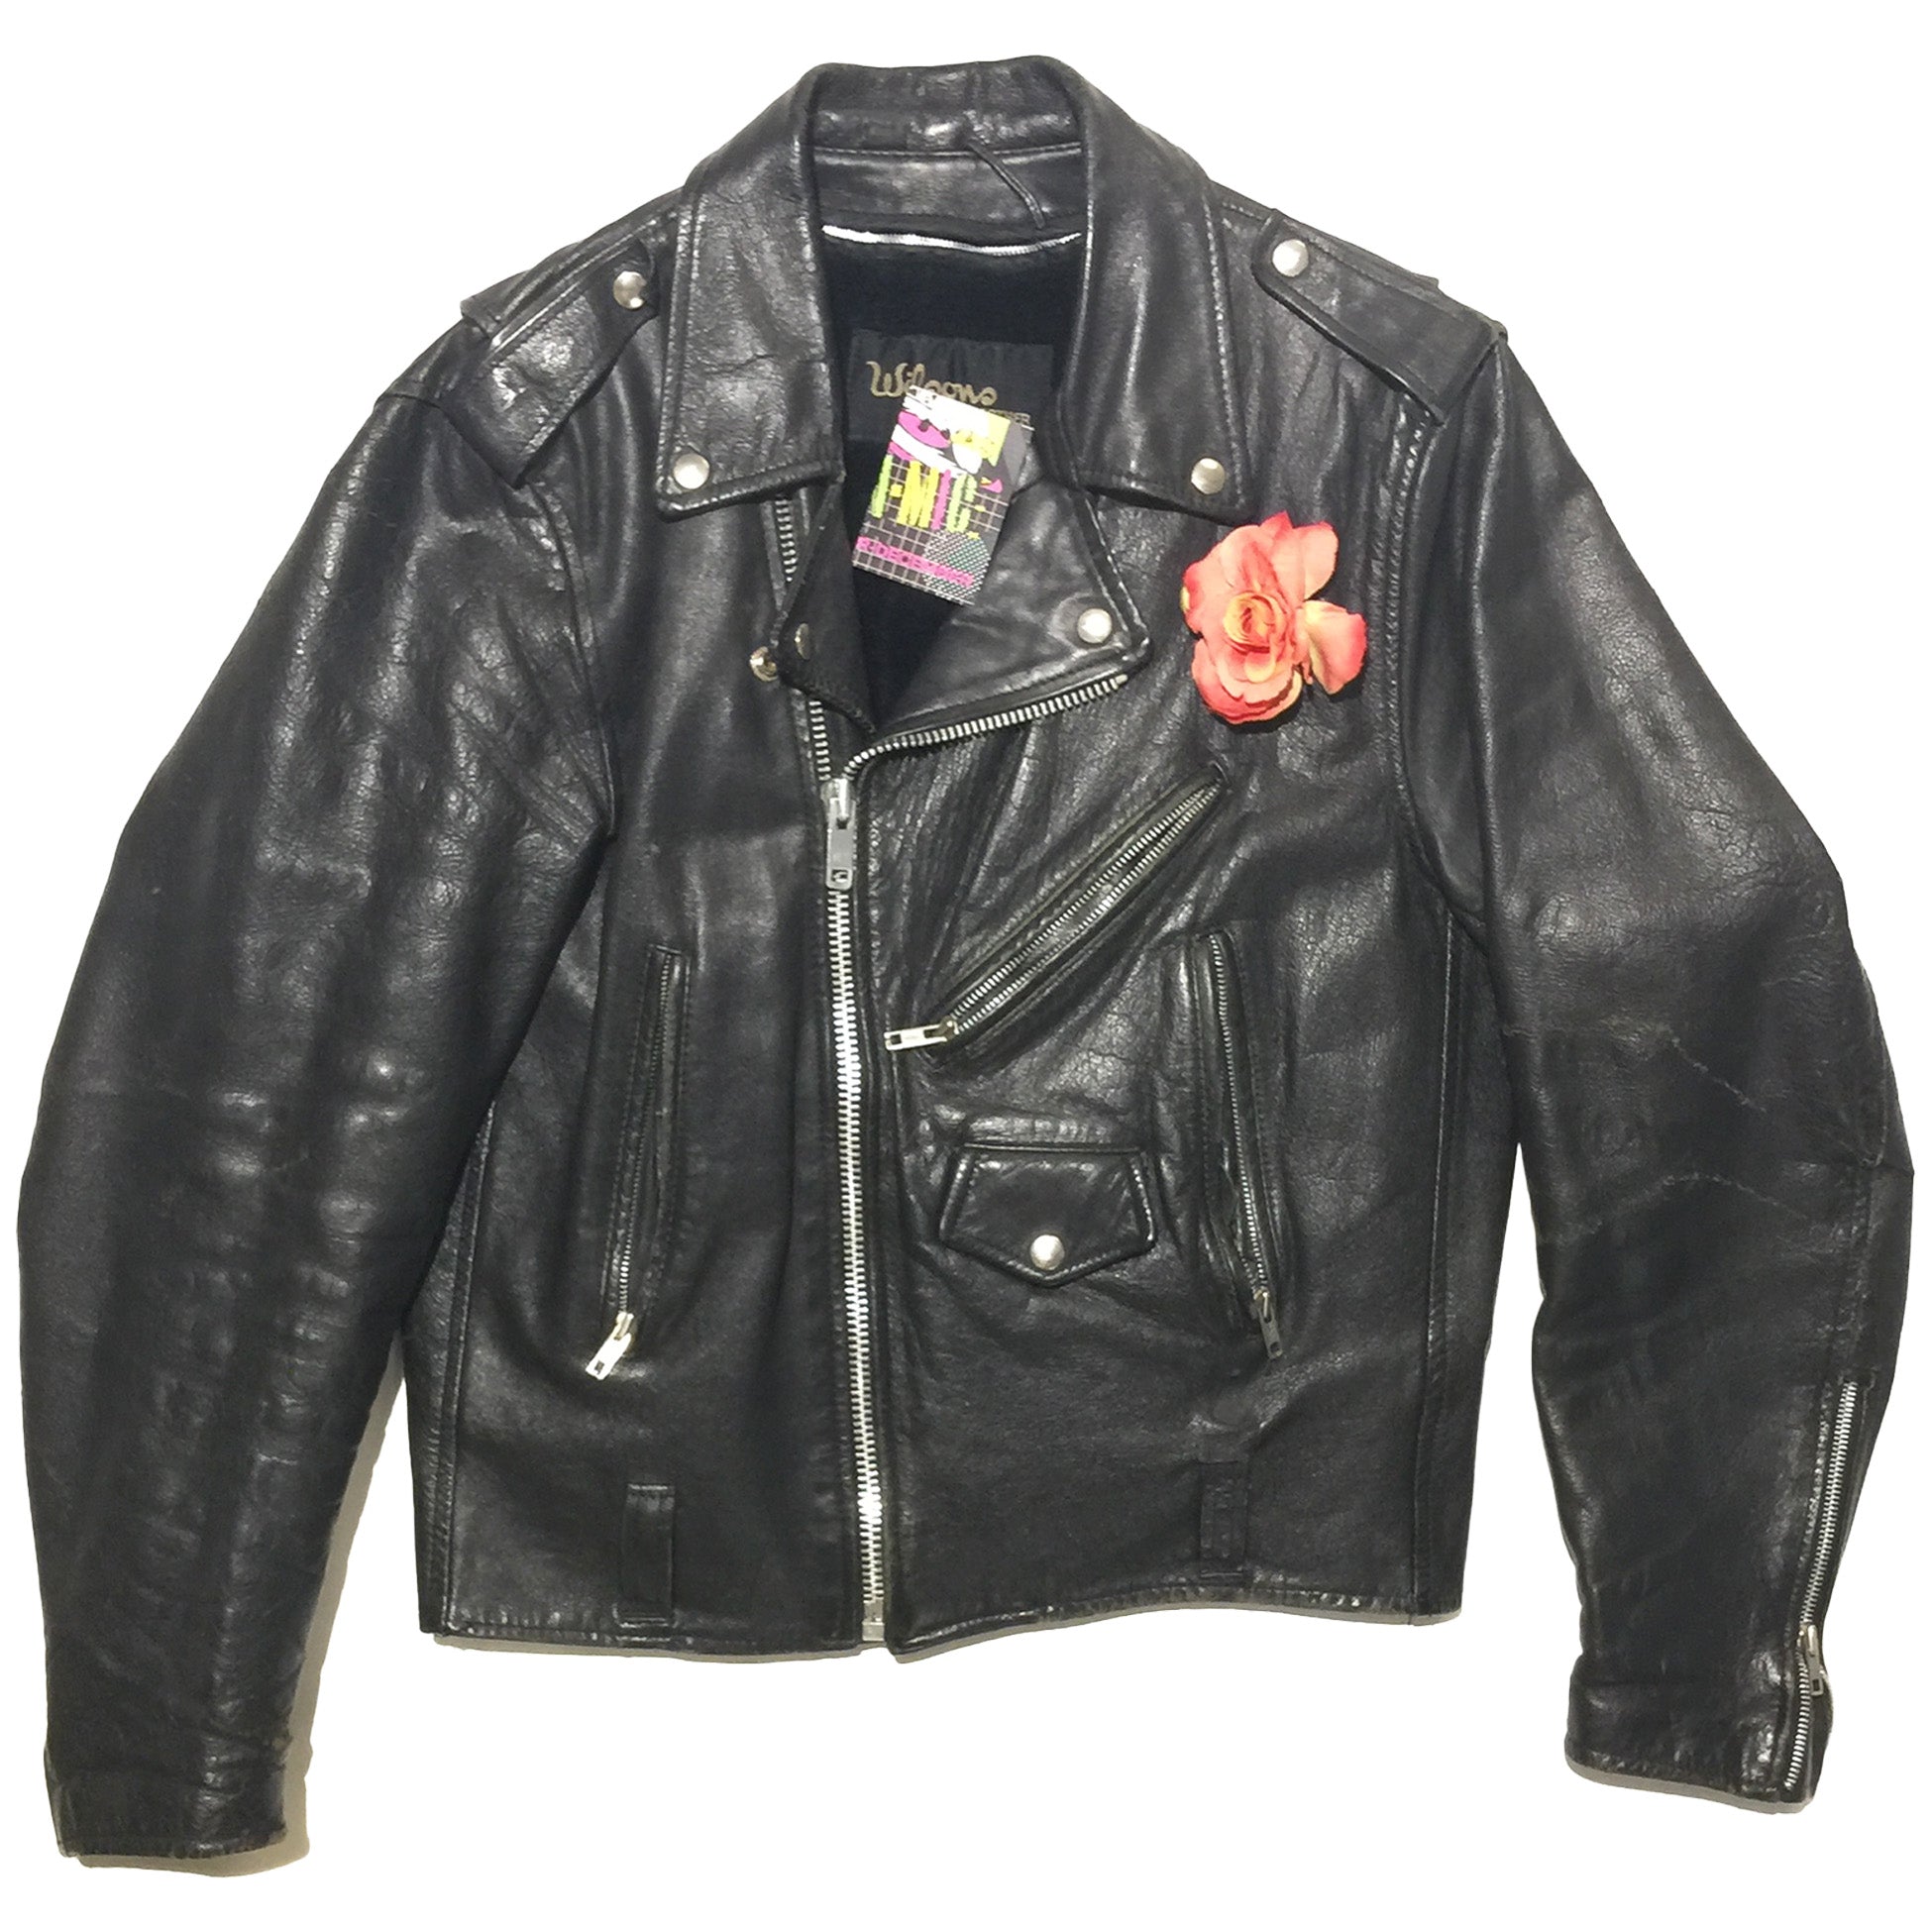 Wilson’s Leather Biker Jacket